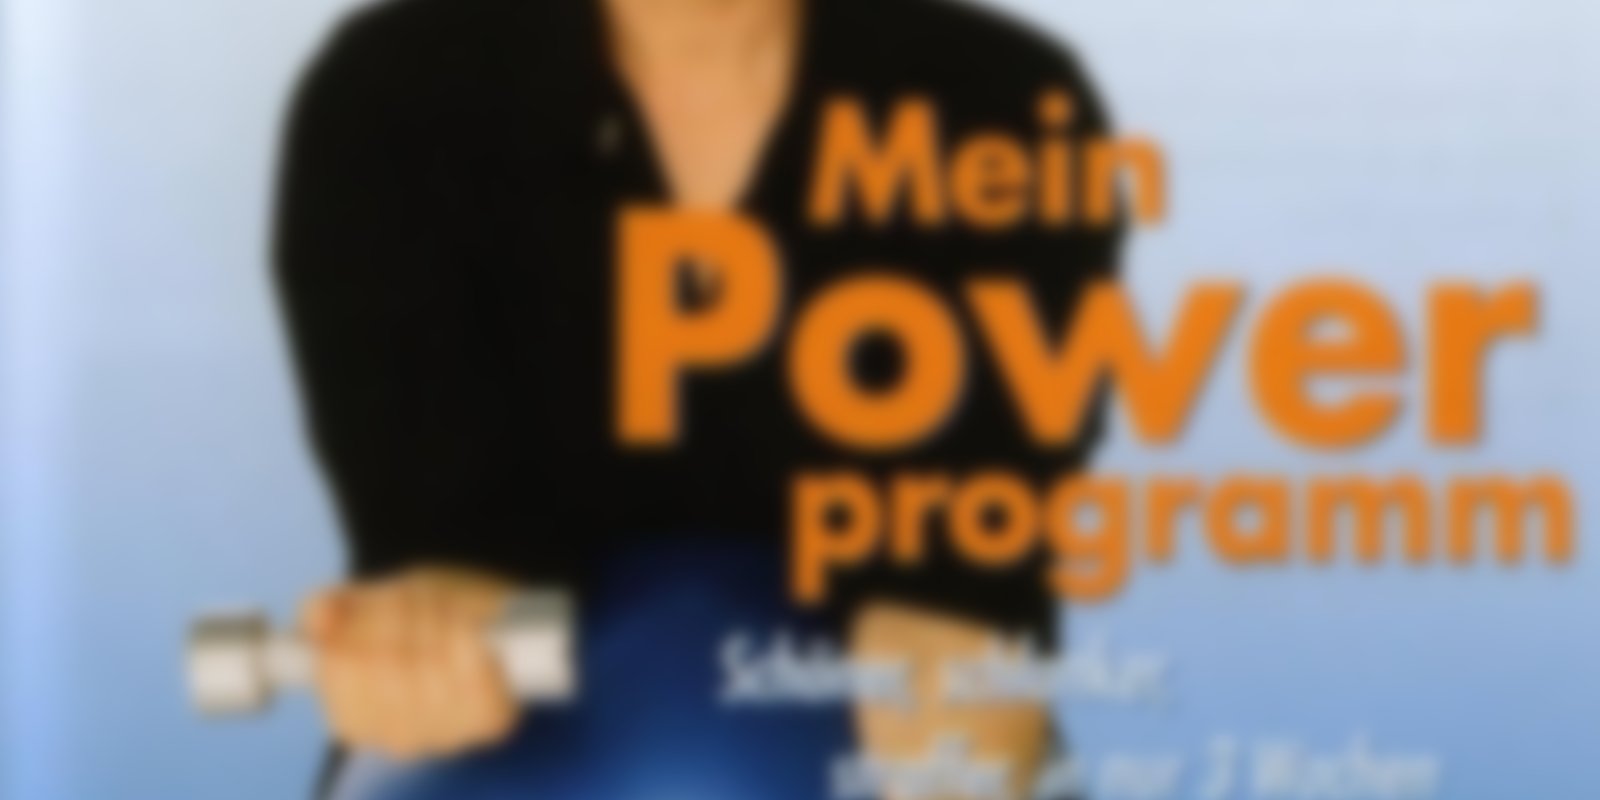 Benita Cantieni - Mein Powerprogramm